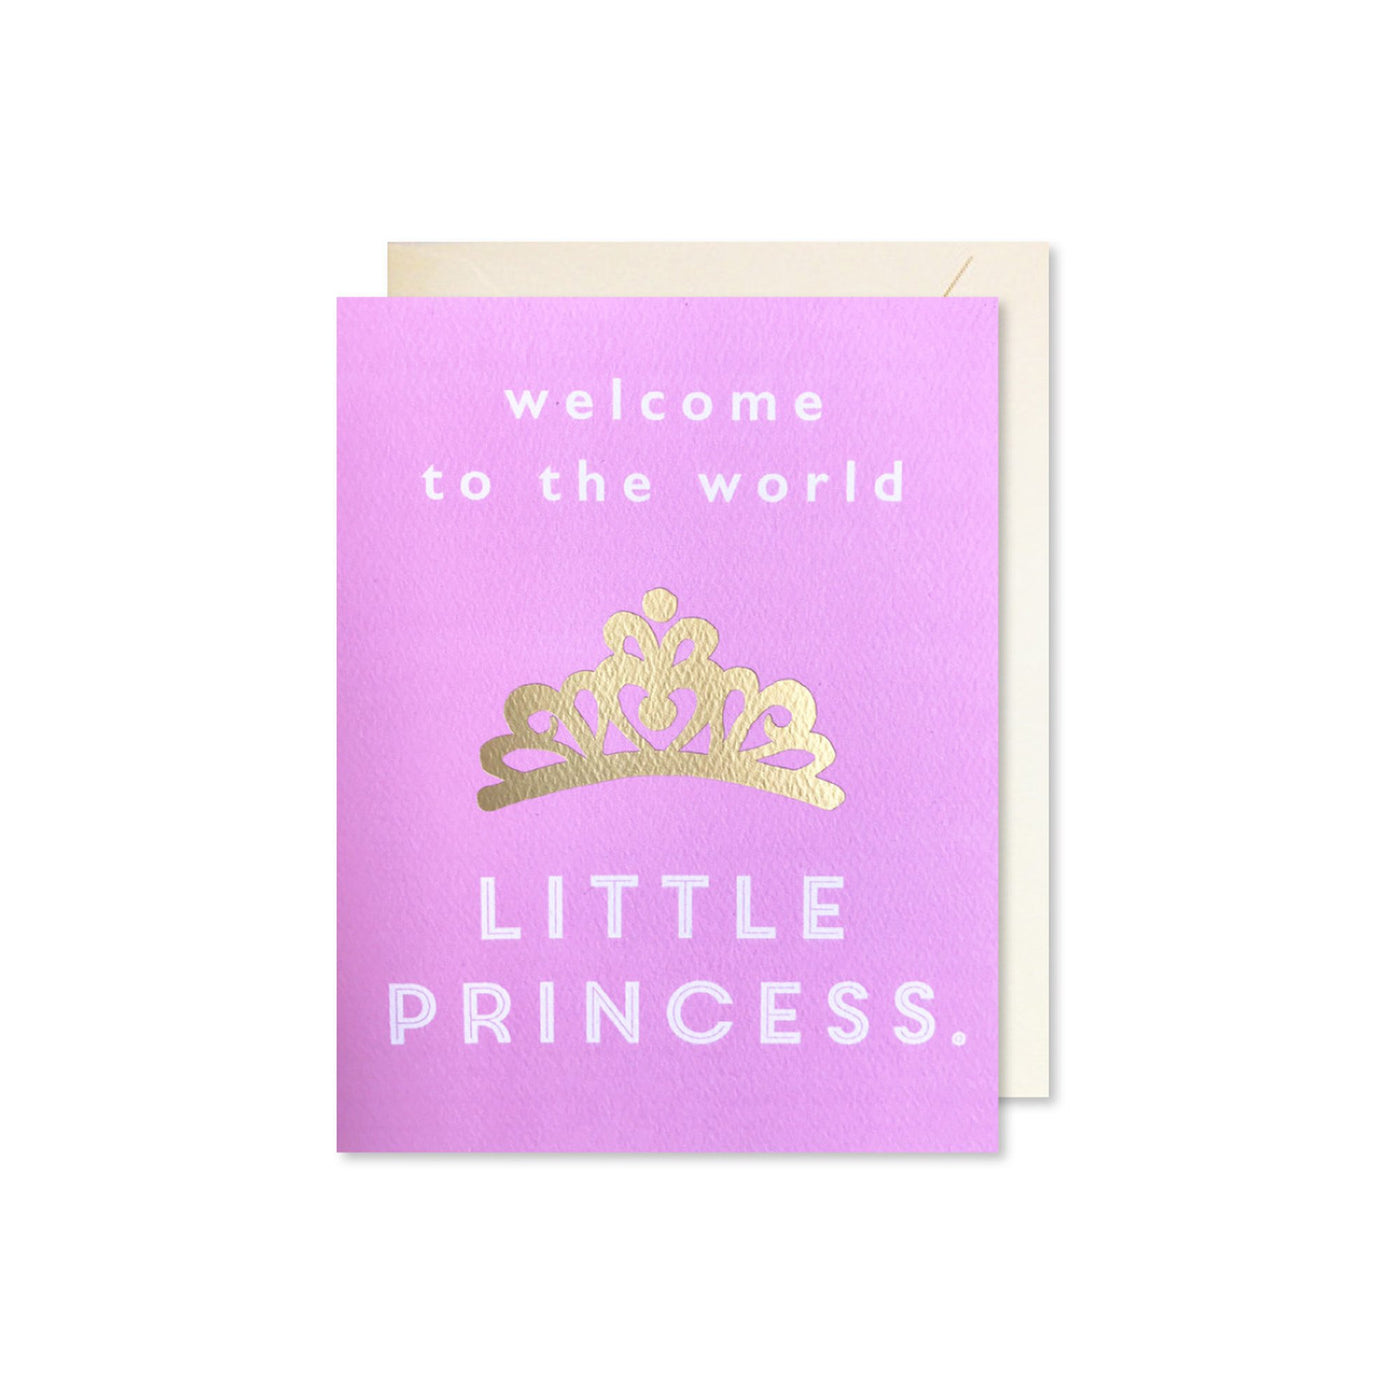 Baby Princess greeting card